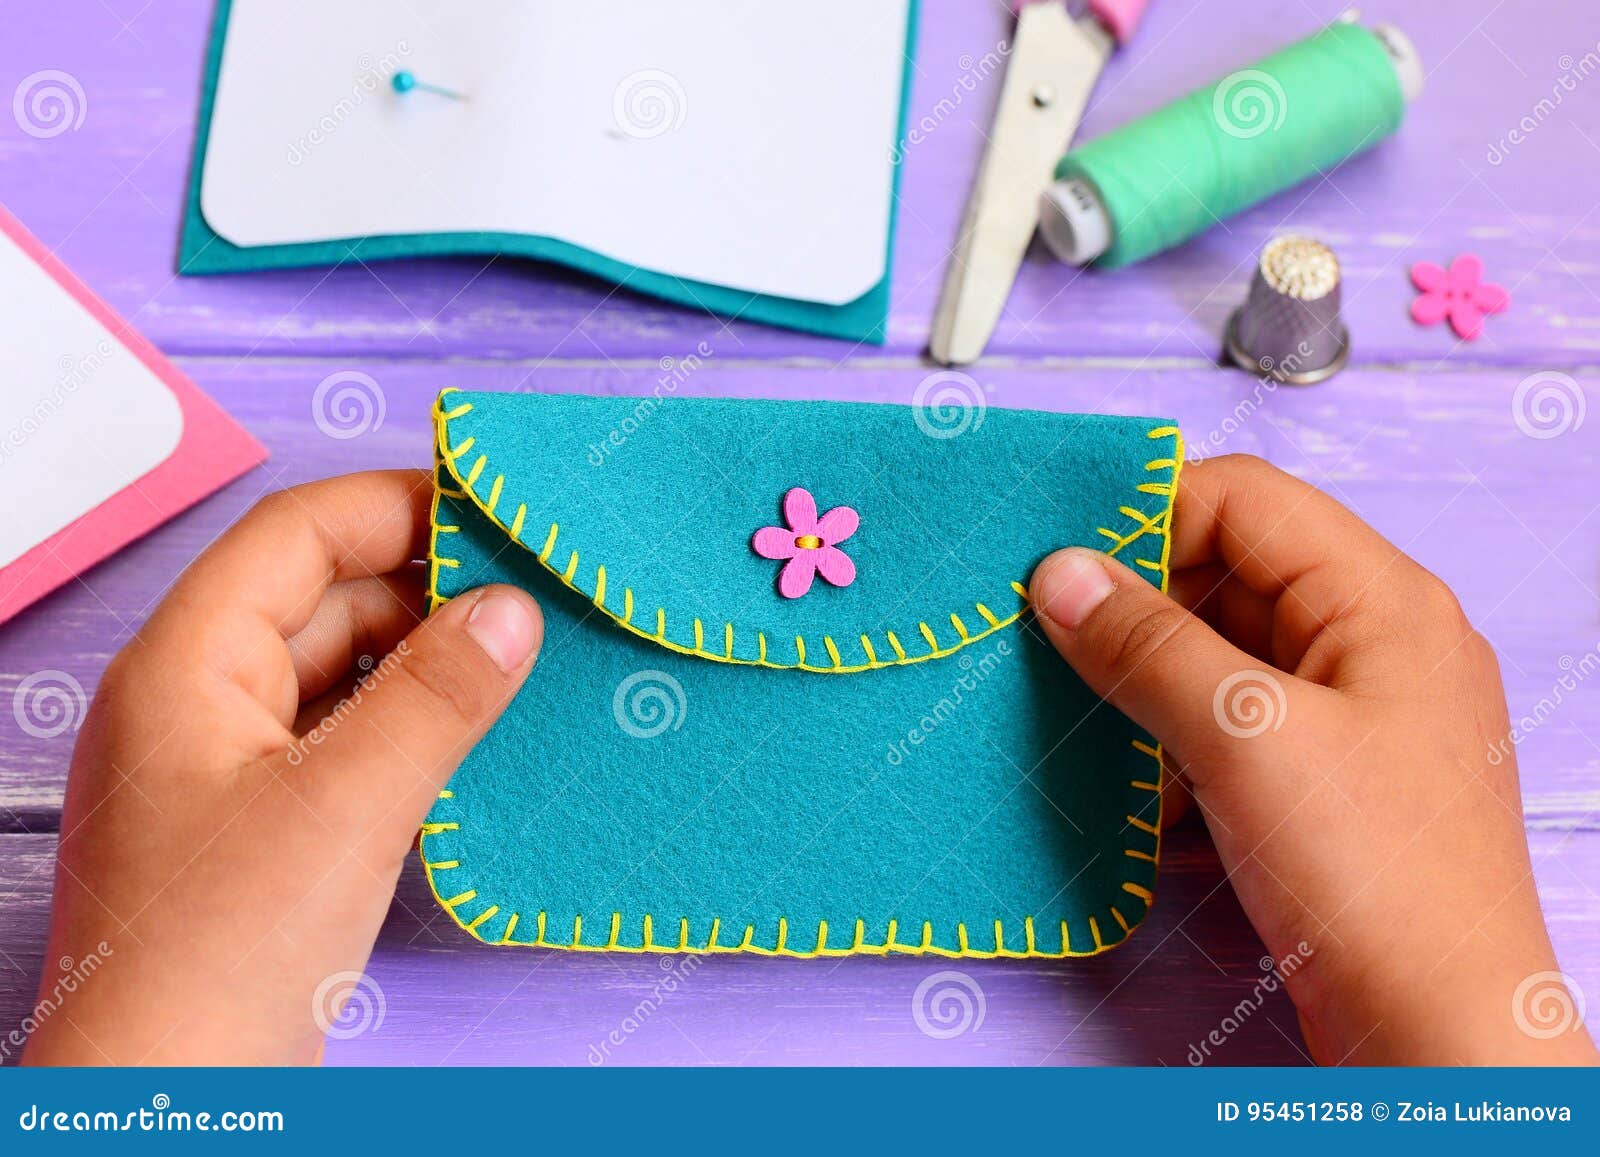 DIY PAPER PURSE / Paper Craft /Easy Origami Purse DIY /Paper Crafts Easy  /How To Make Paper Handbag - YouTube